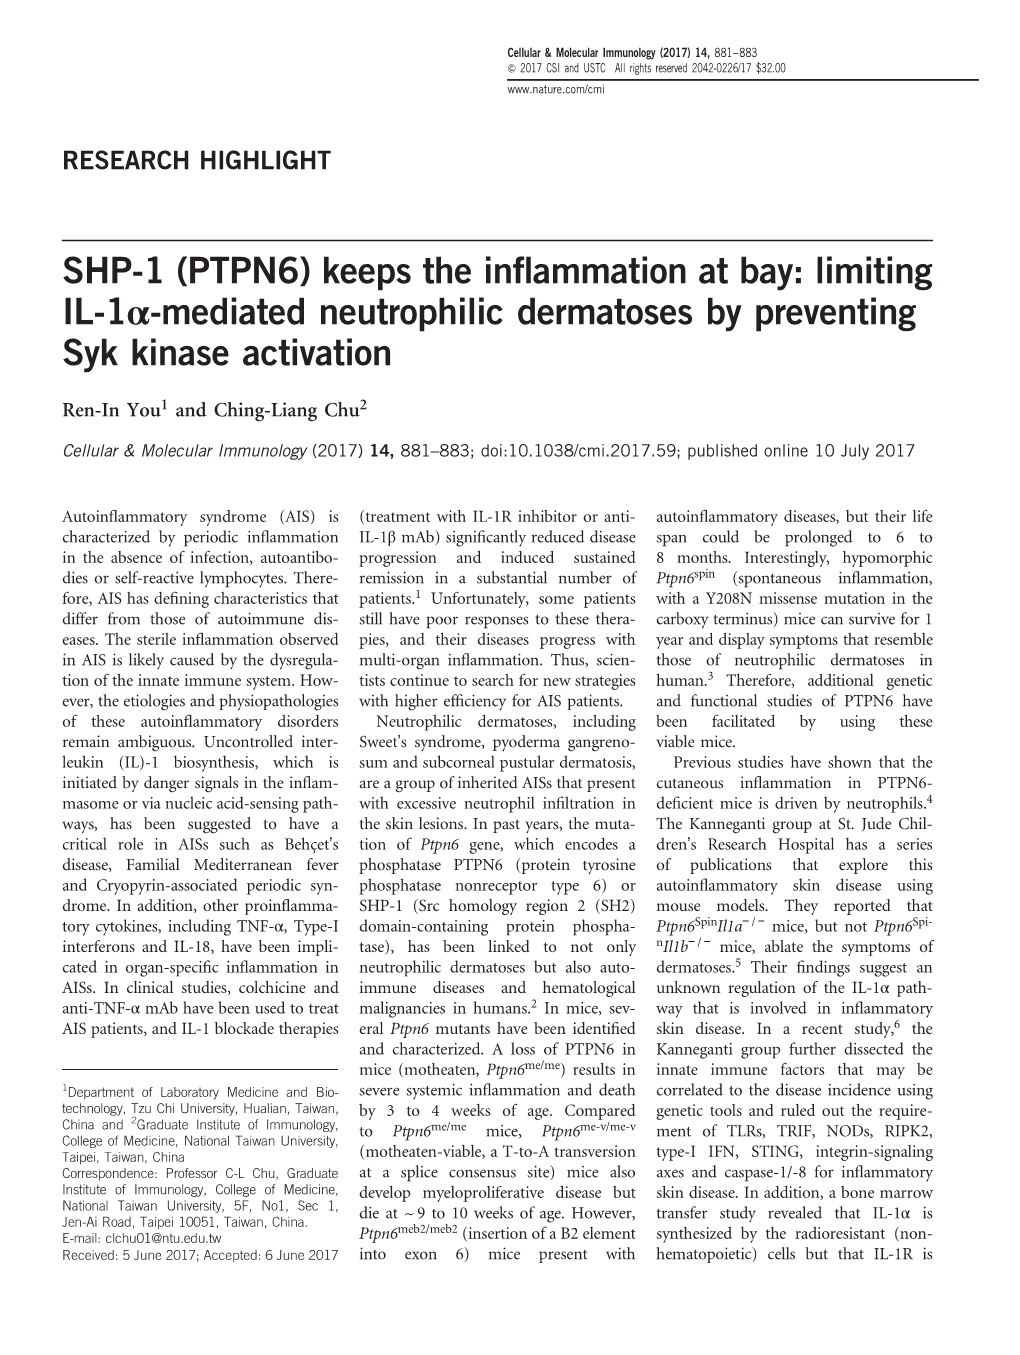 SHP-1 (PTPN6) Keeps the Inflammation at Bay: Limiting IL